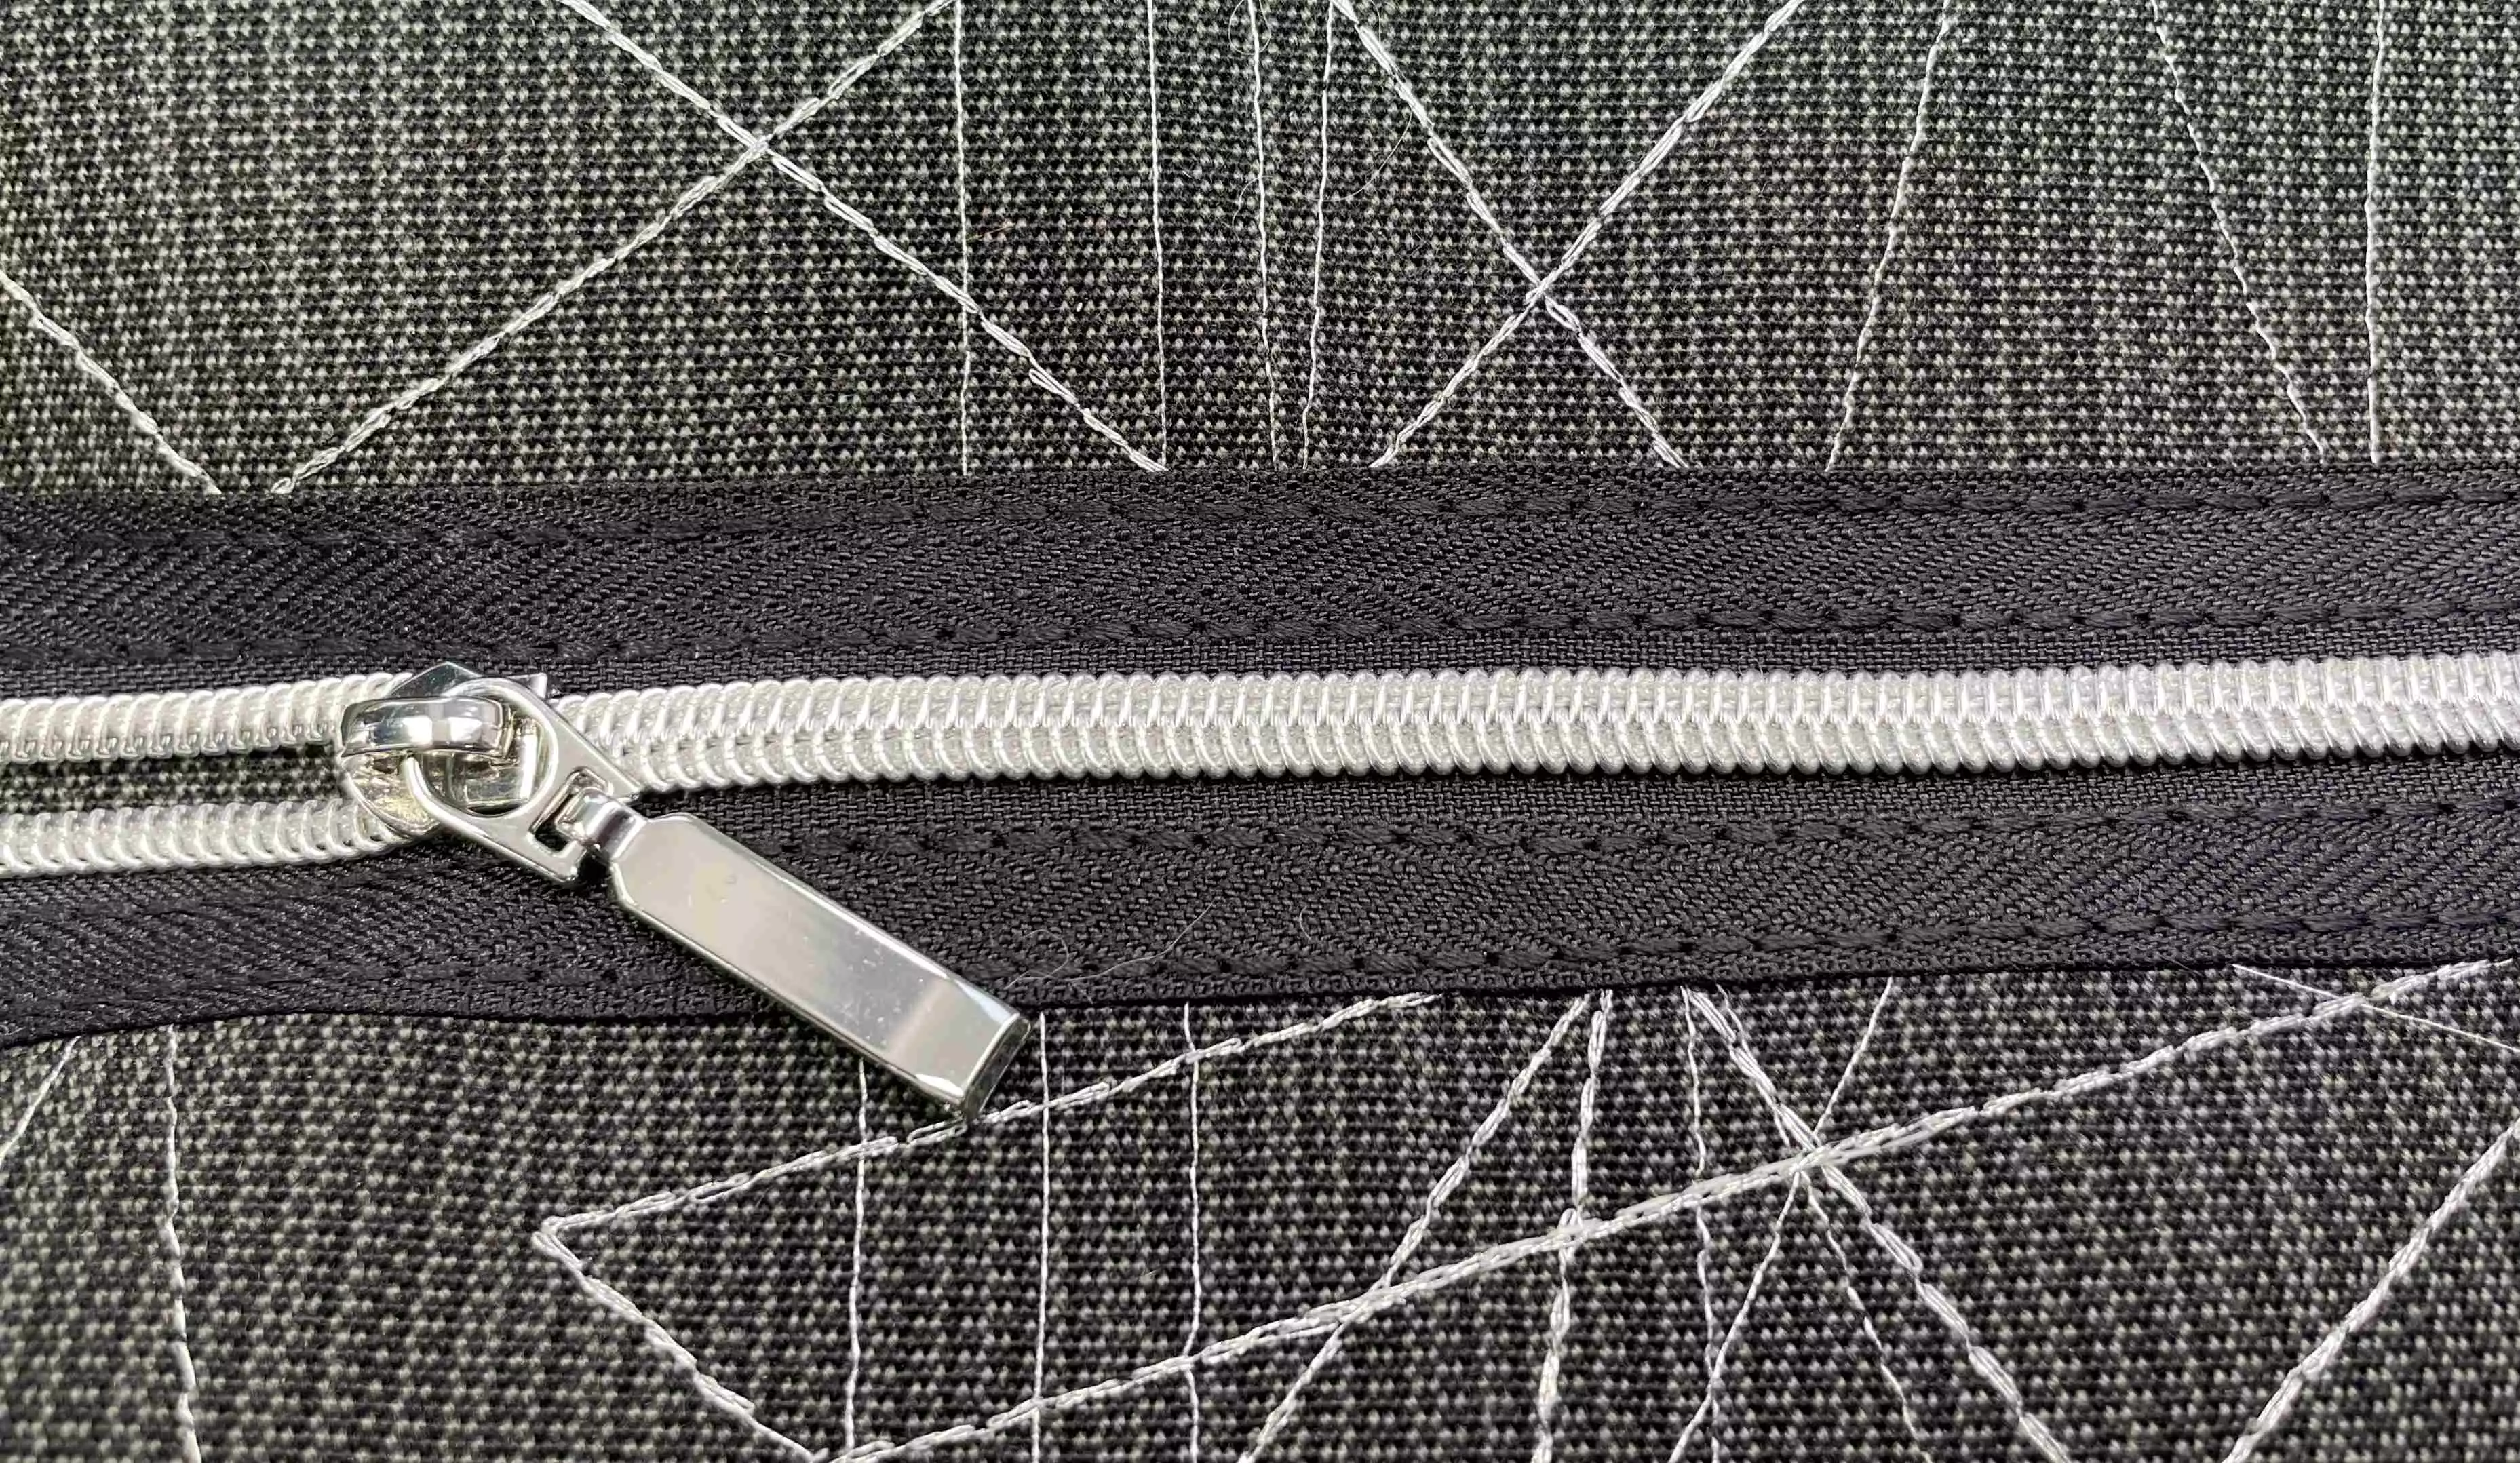 Simple-zippered-pouch-alt2-step4-zipper-stitched.jpg